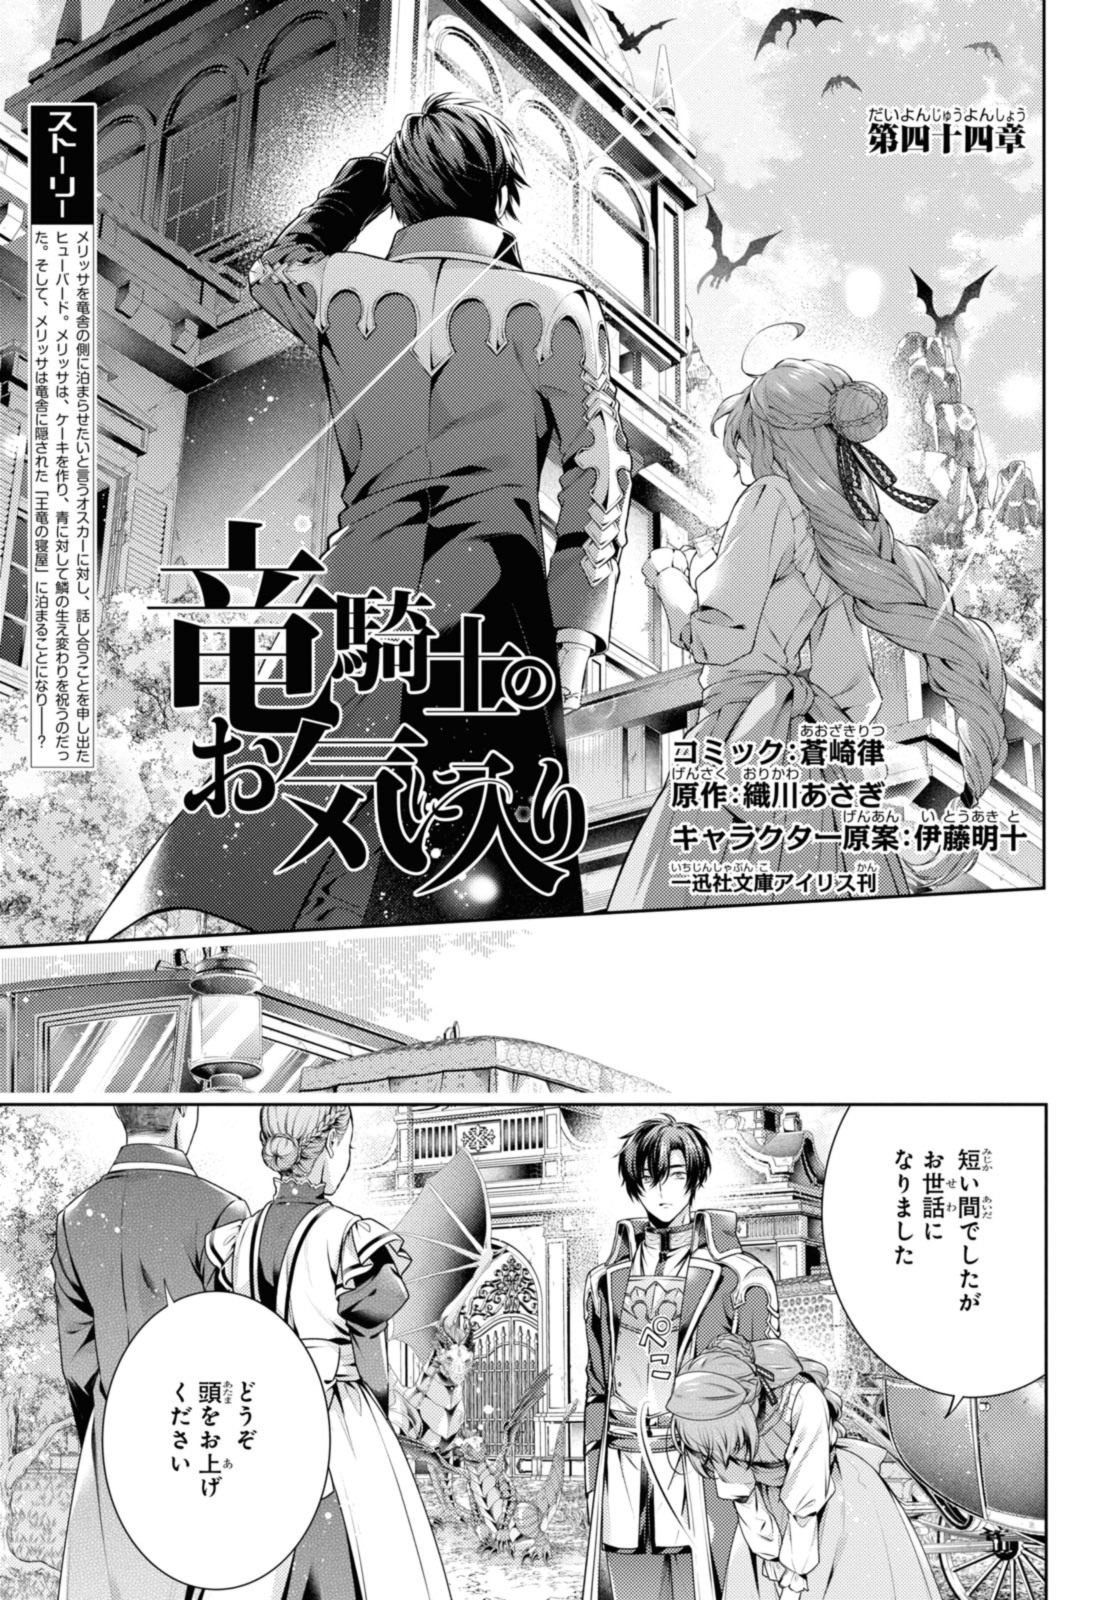 Ryukishi no Okiniiri - Chapter 44.1 - Page 1